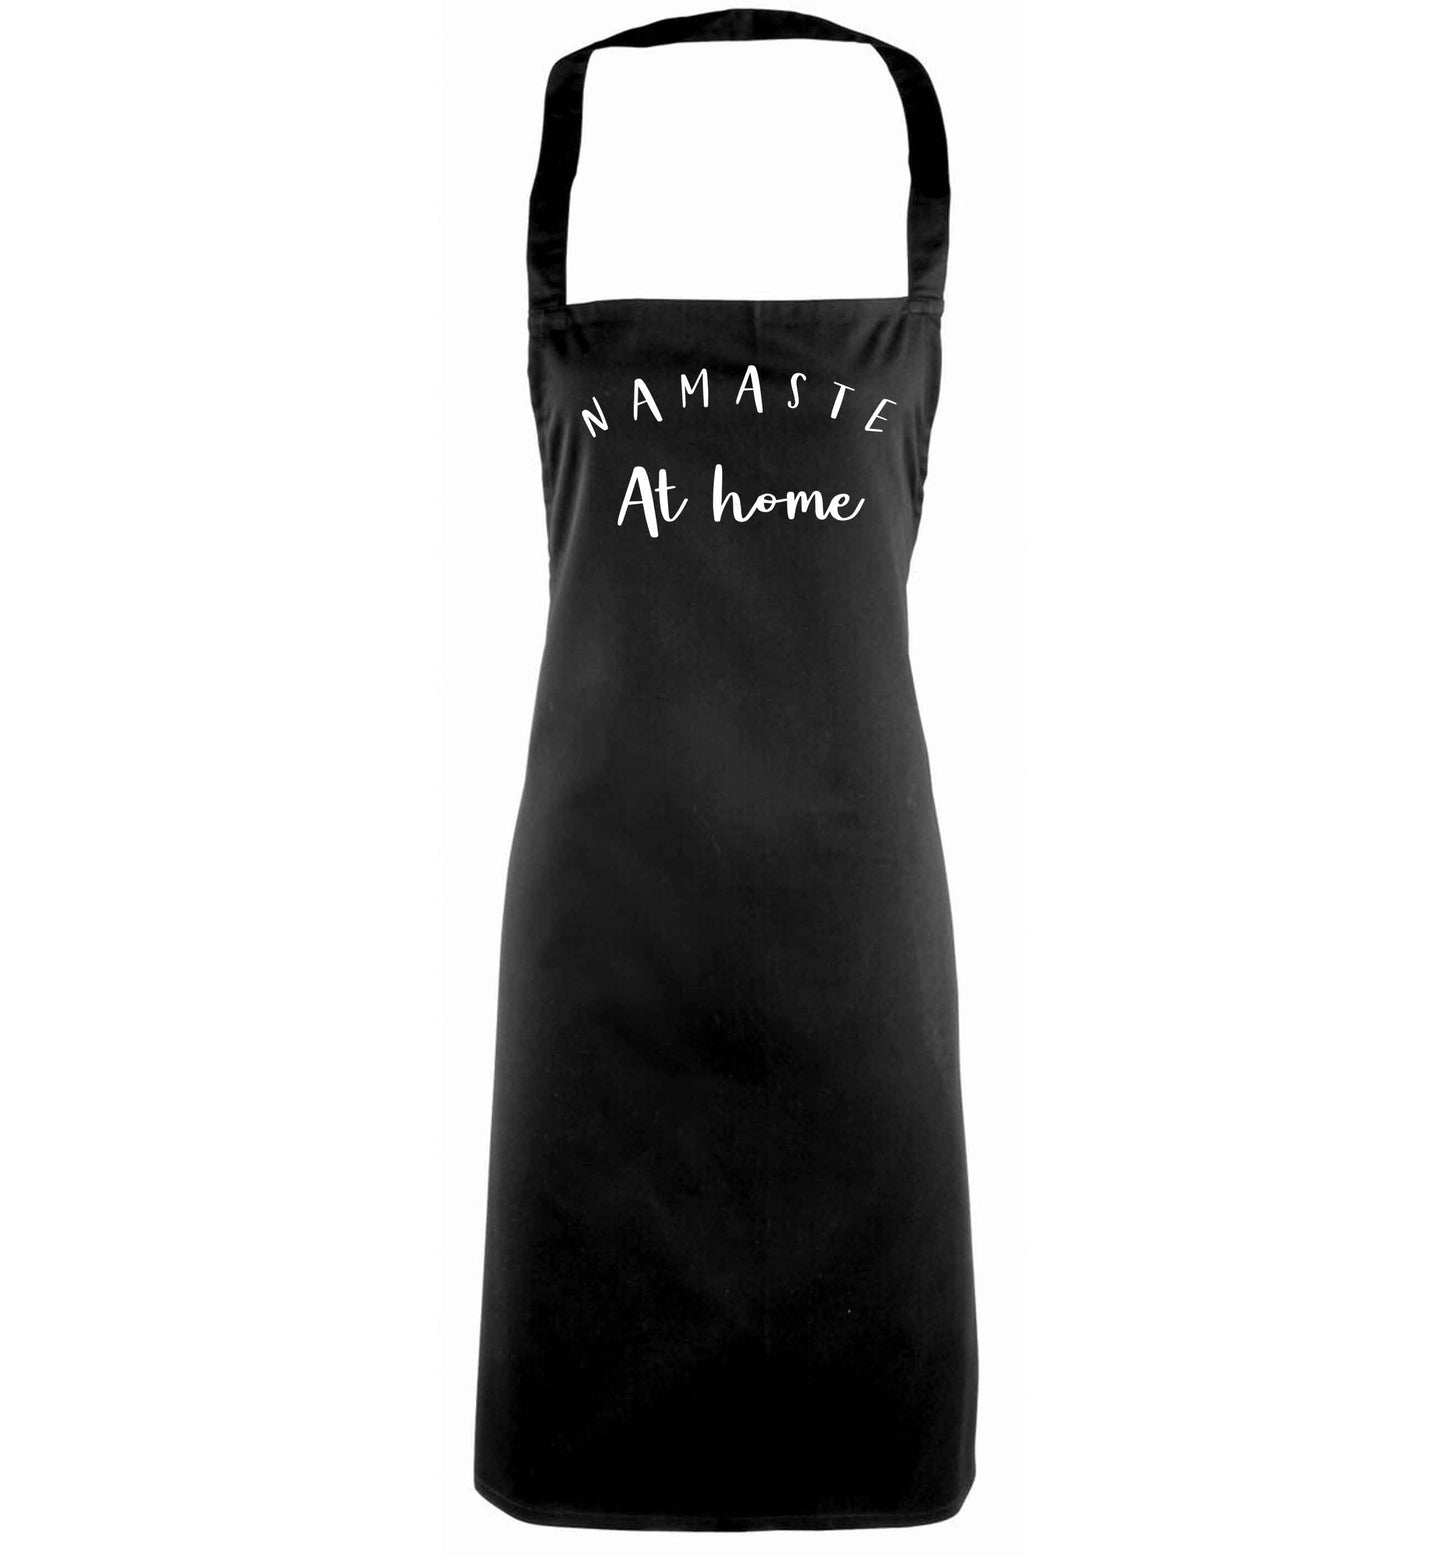 Namaste at home black apron